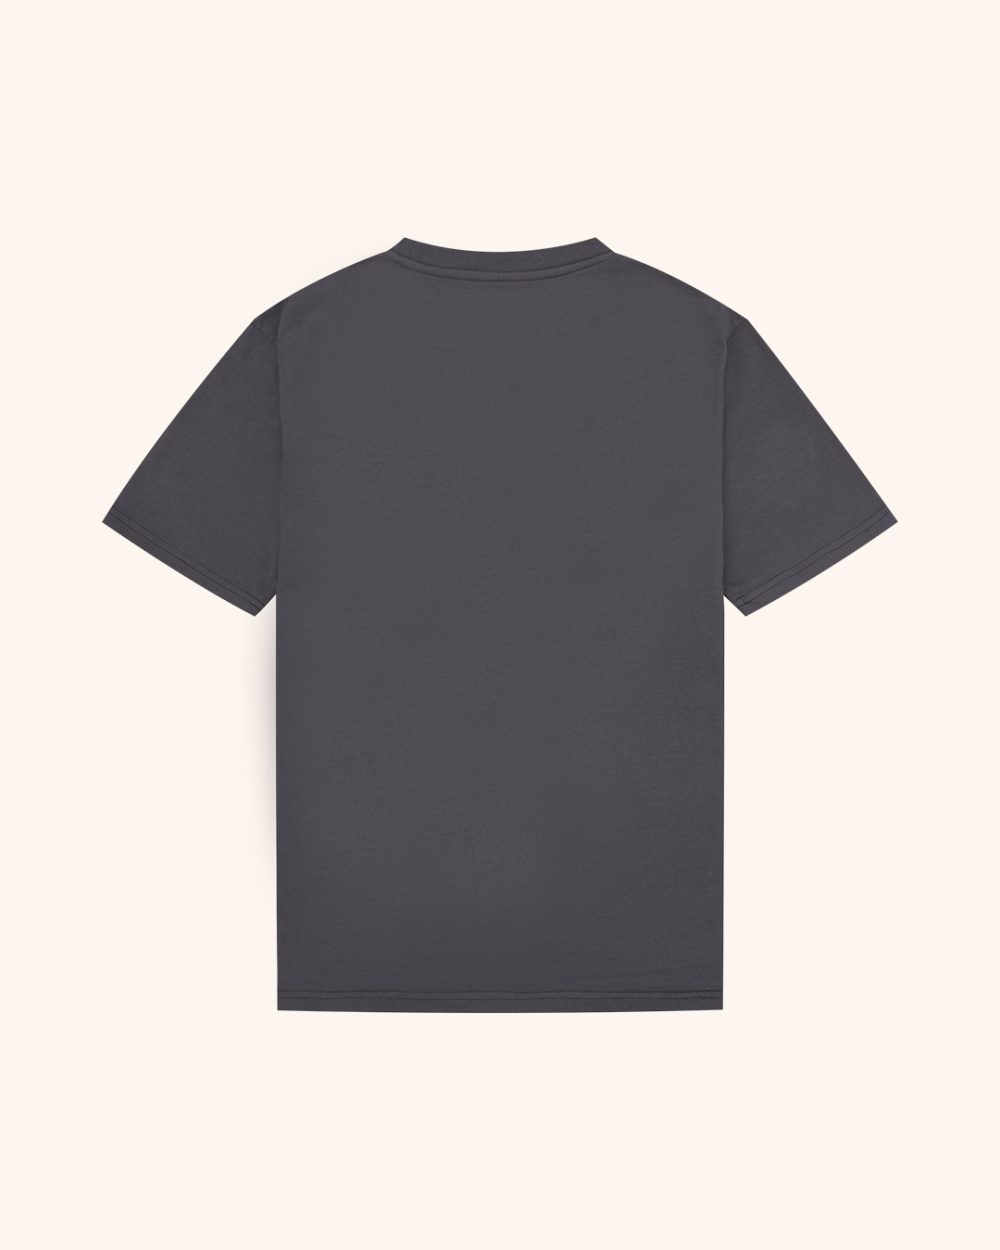 Humano T-shirt Charcoal